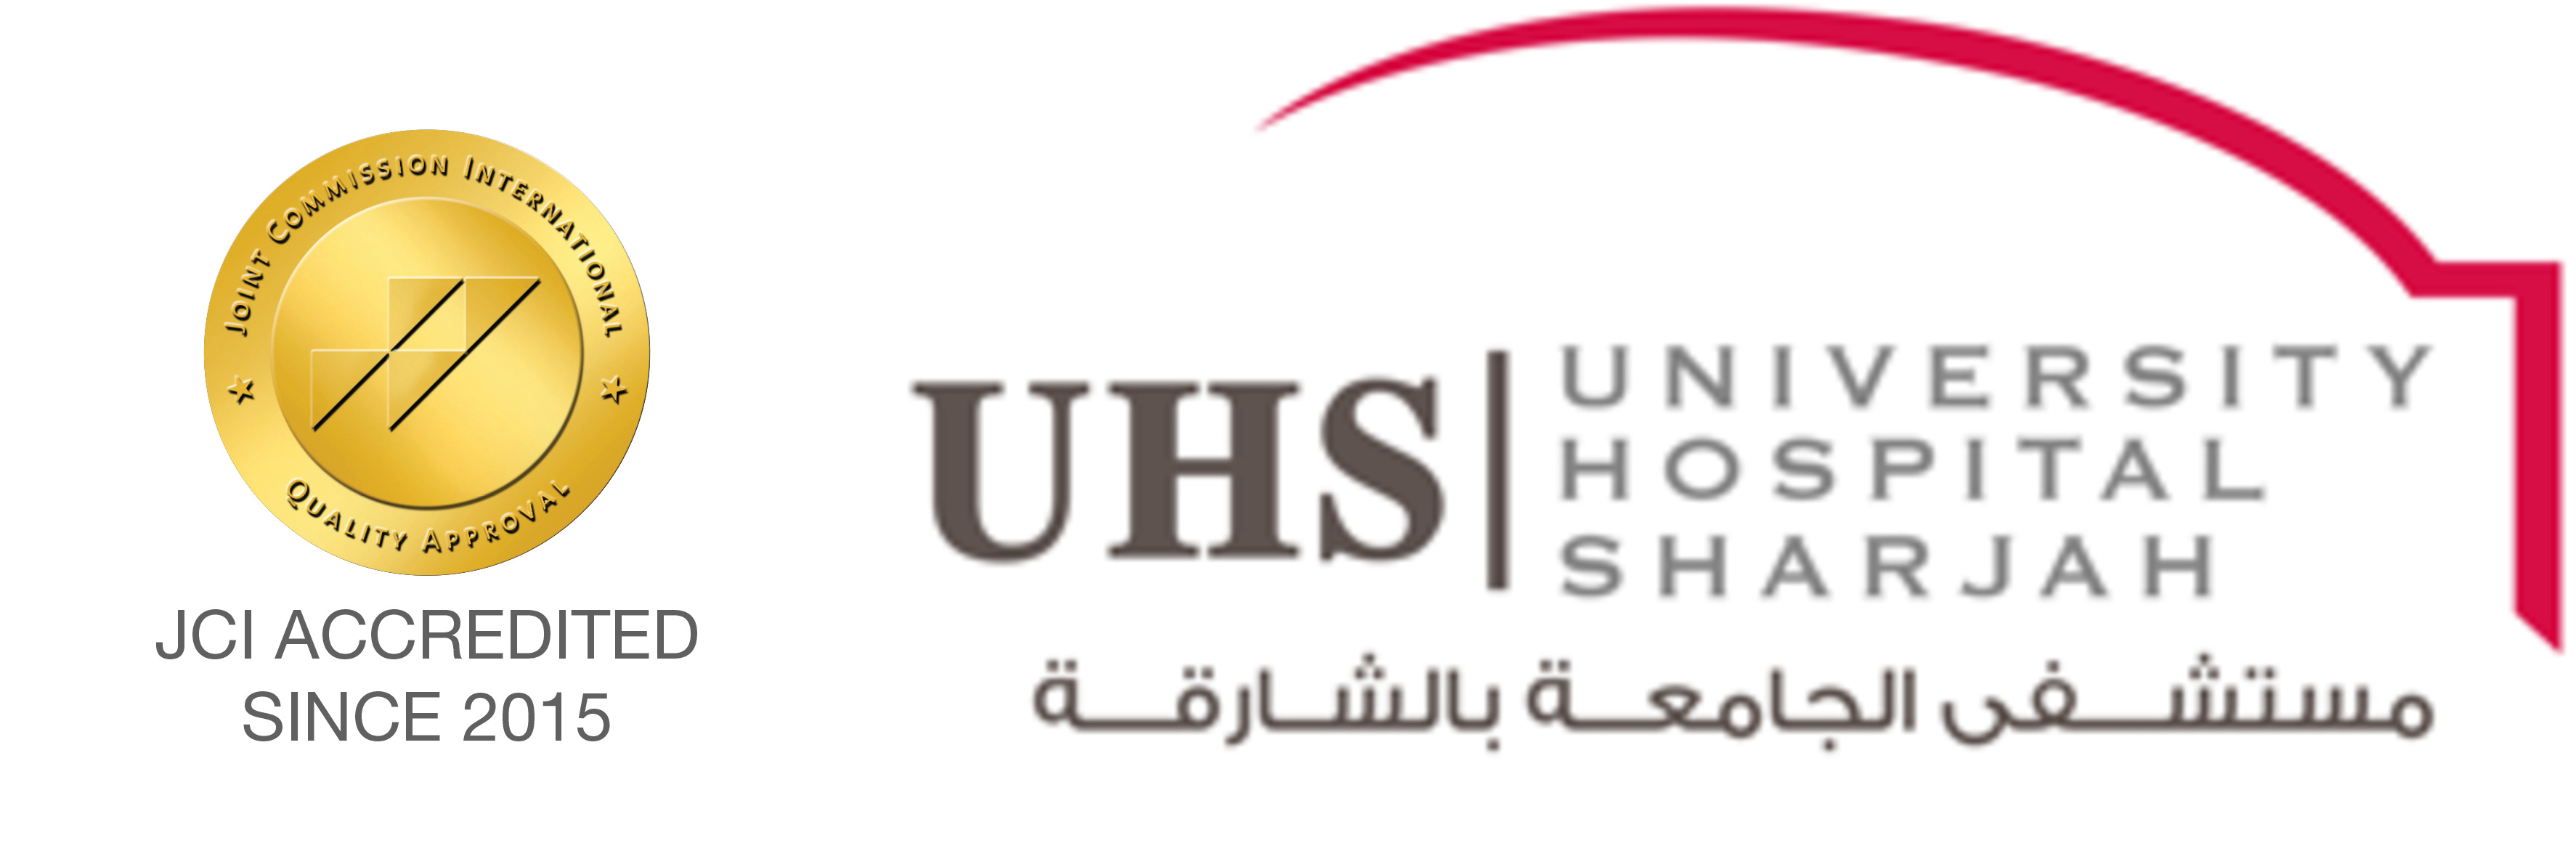 University Hospital Sharjah Logo